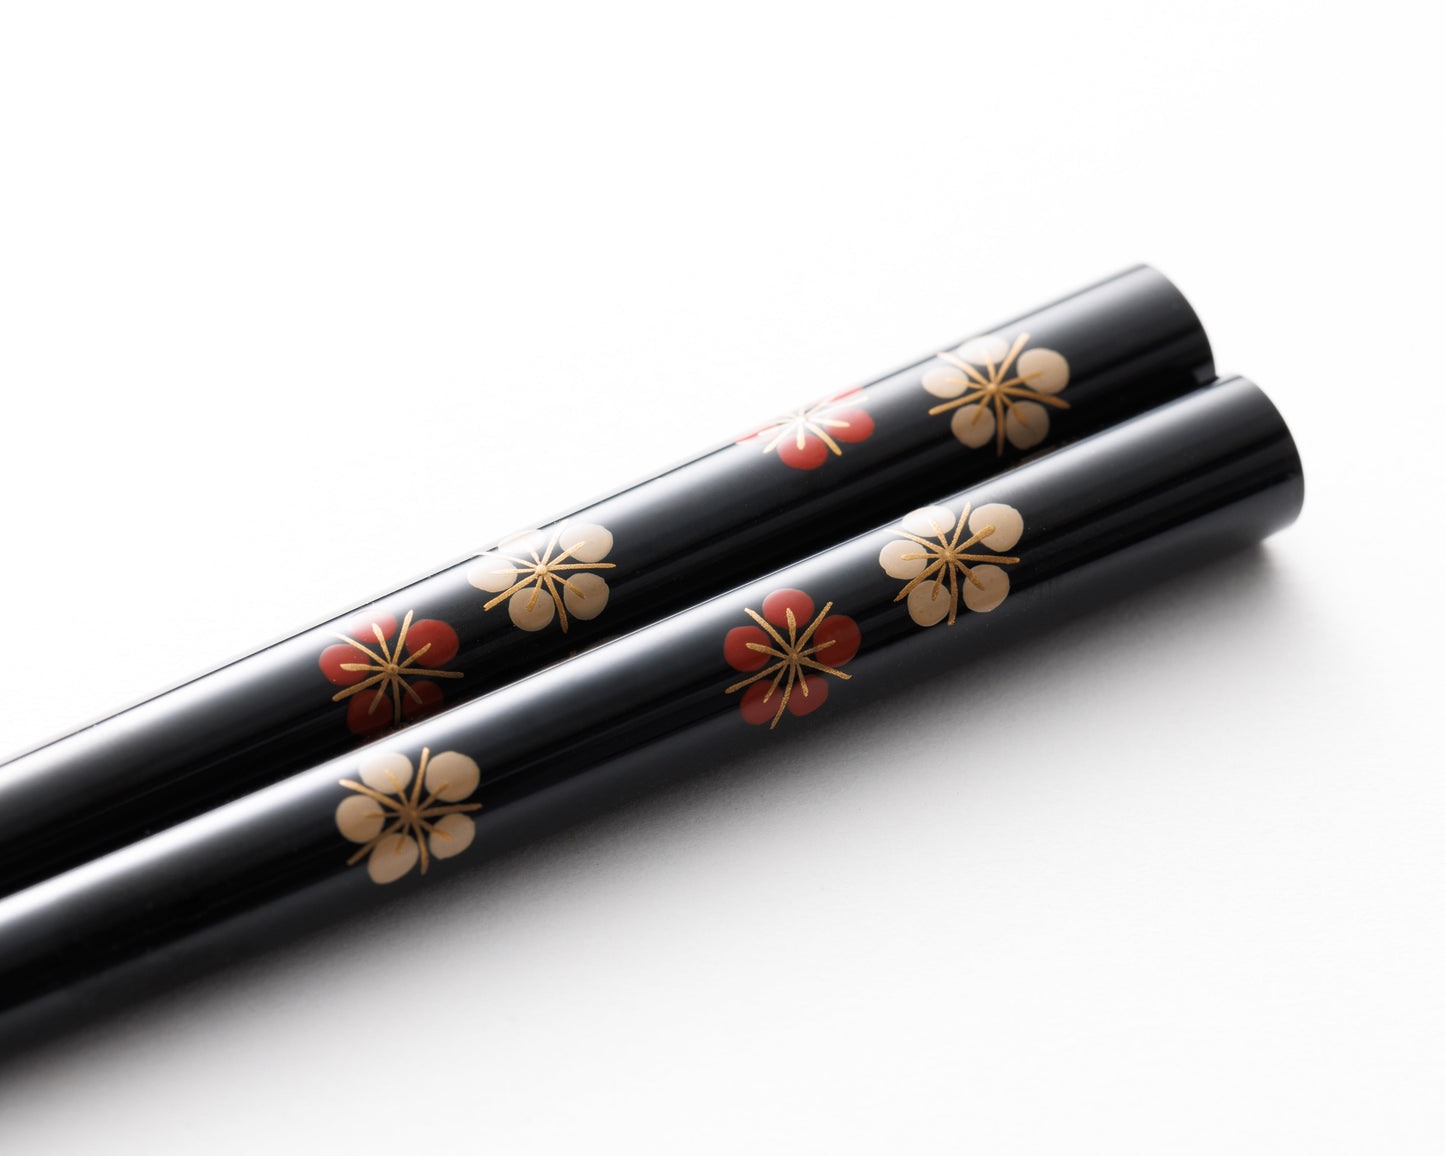 Wajimaya Zenjin original chopsticks (black/red and white plum)